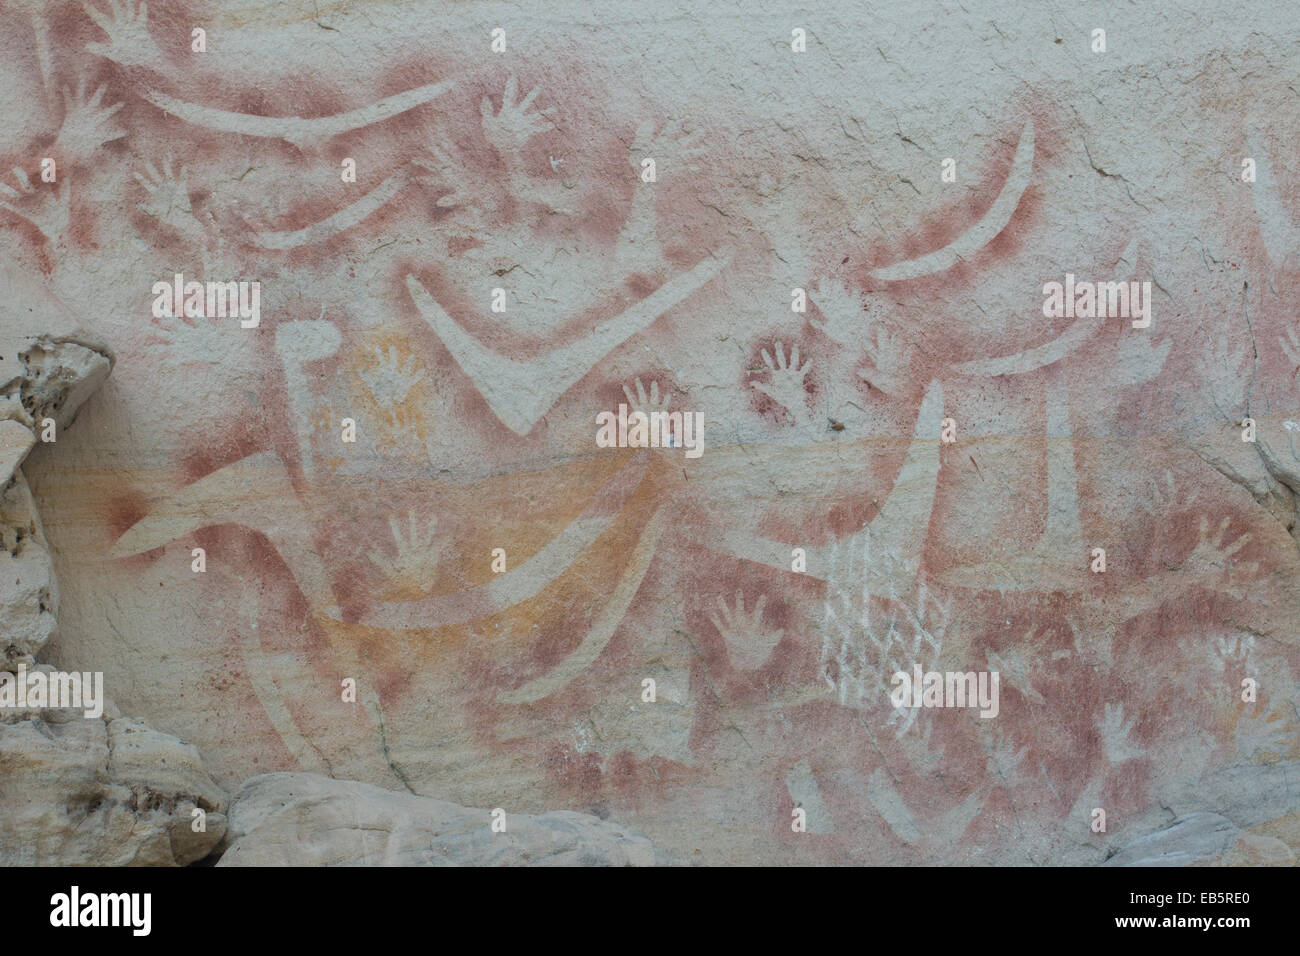 Aboriginal rock art australia hands hi-res stock photography and images -  Alamy